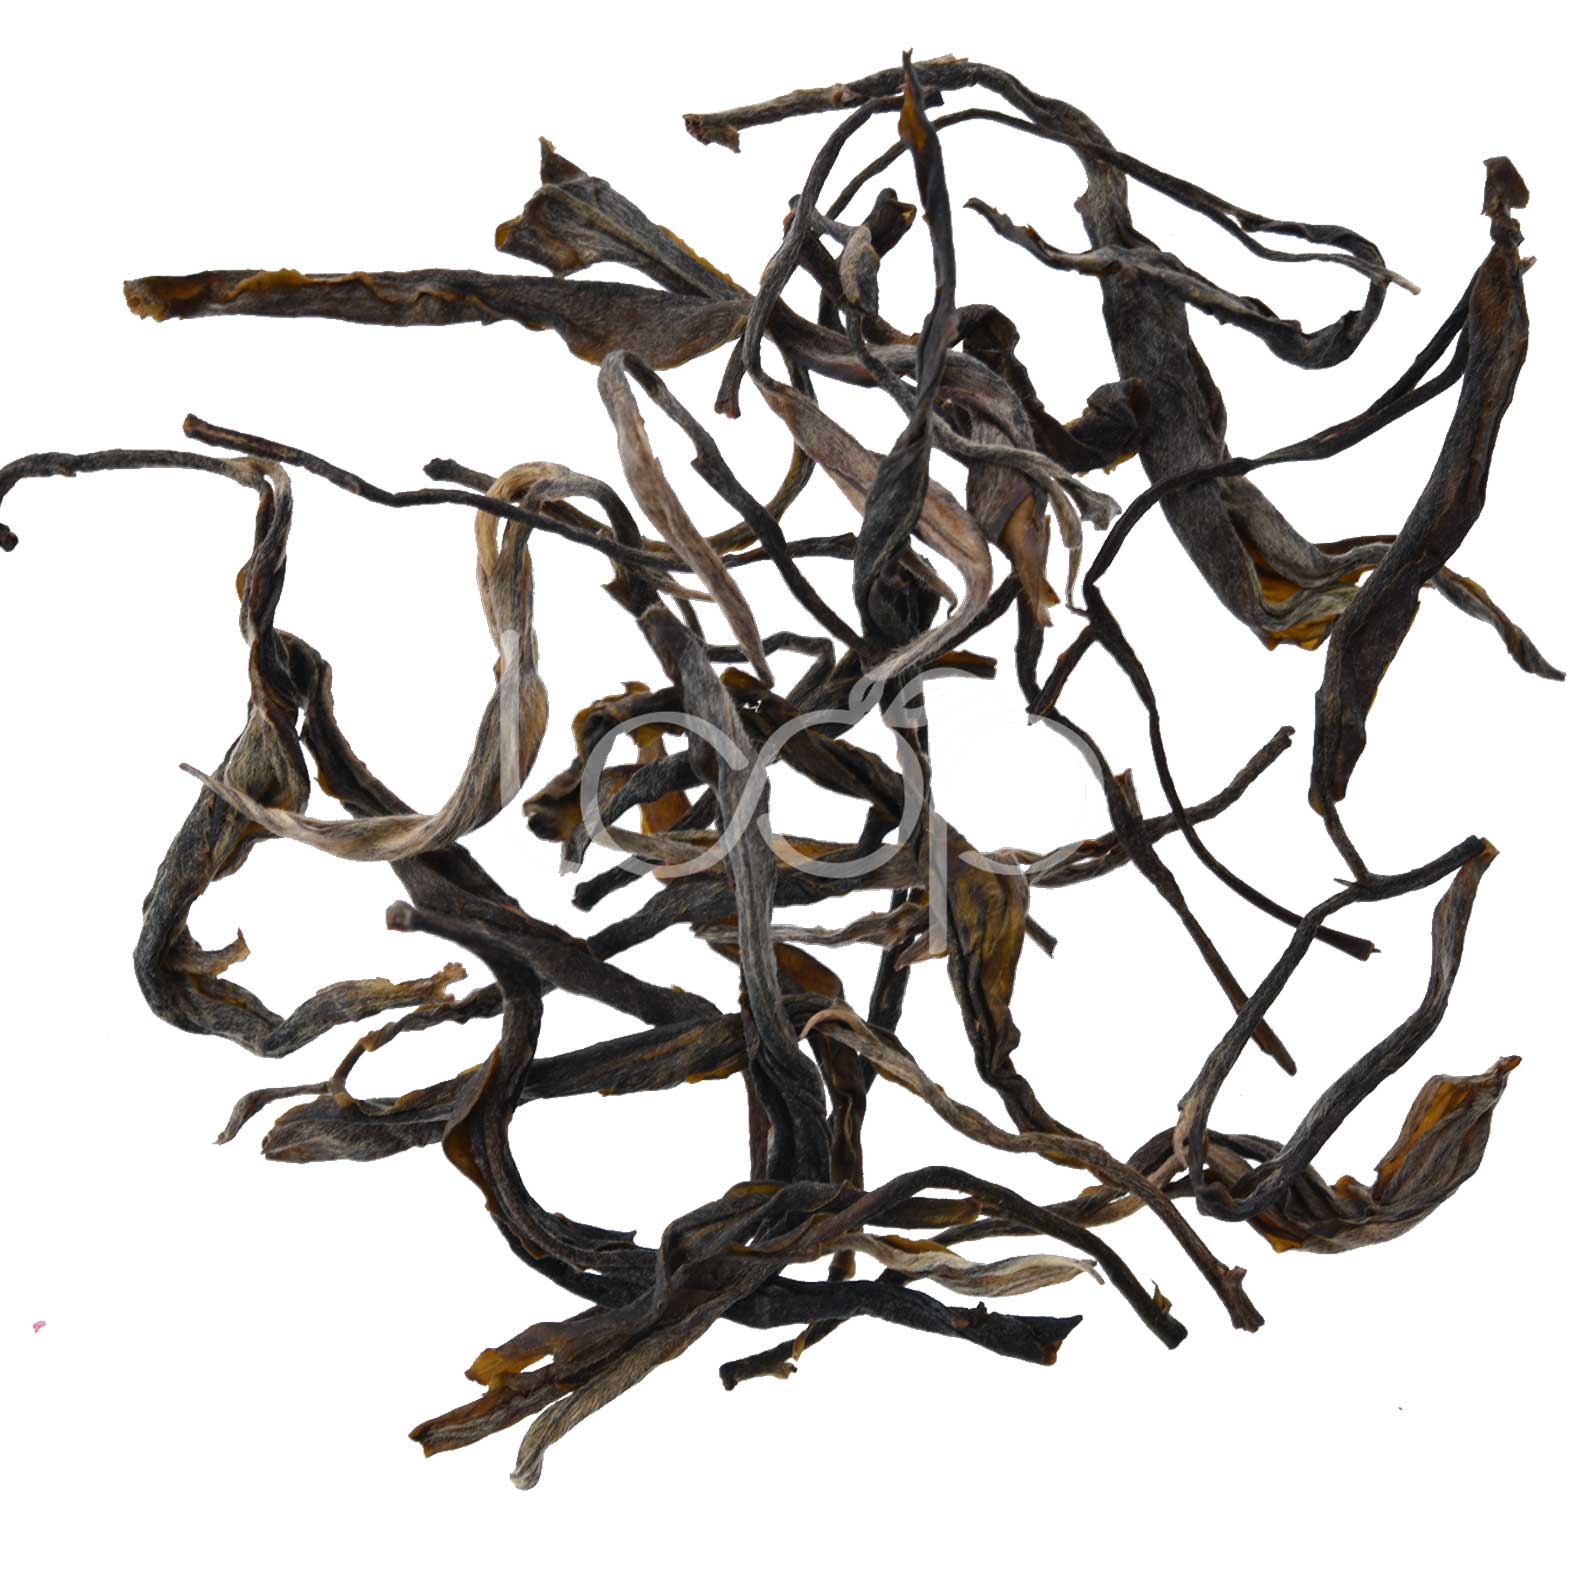 OEM/ODM China Organic Earl Grey Loose Leaf Tea - Raw Yunnan Puerh Sheng Puerh Tea#2 – Goodtea